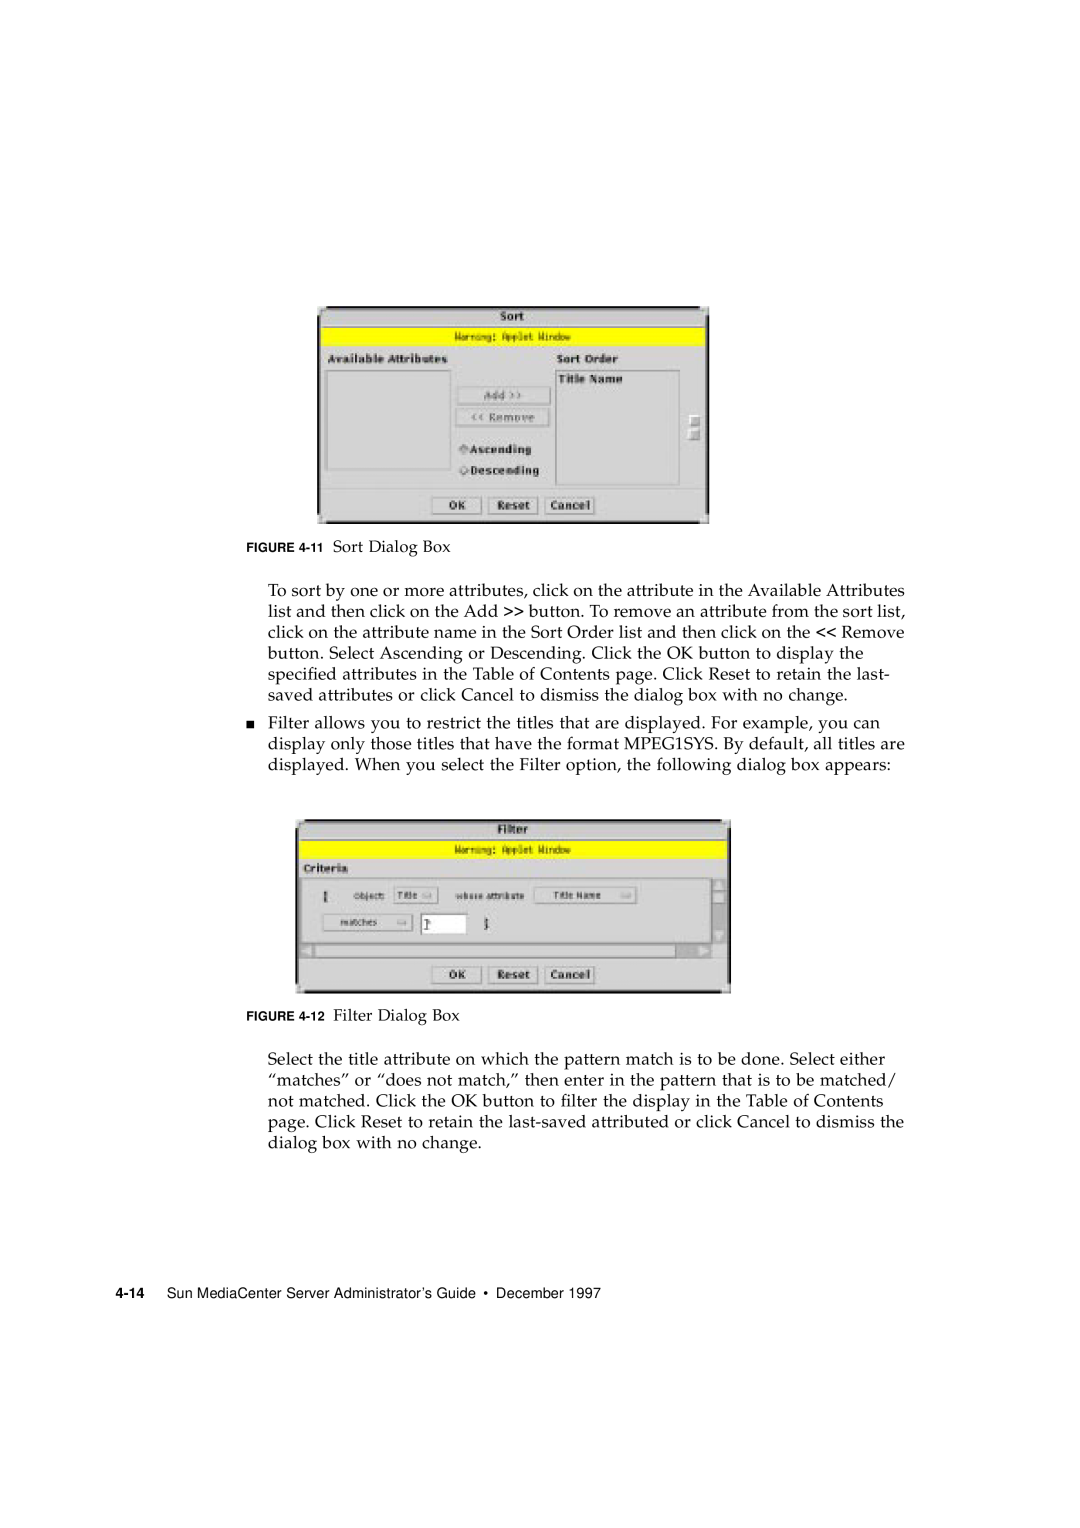 Sun Microsystems 2.1 manual 11 Sort Dialog Box, 12 Filter Dialog Box, Sun MediaCenter Server Administrator’s Guide December 